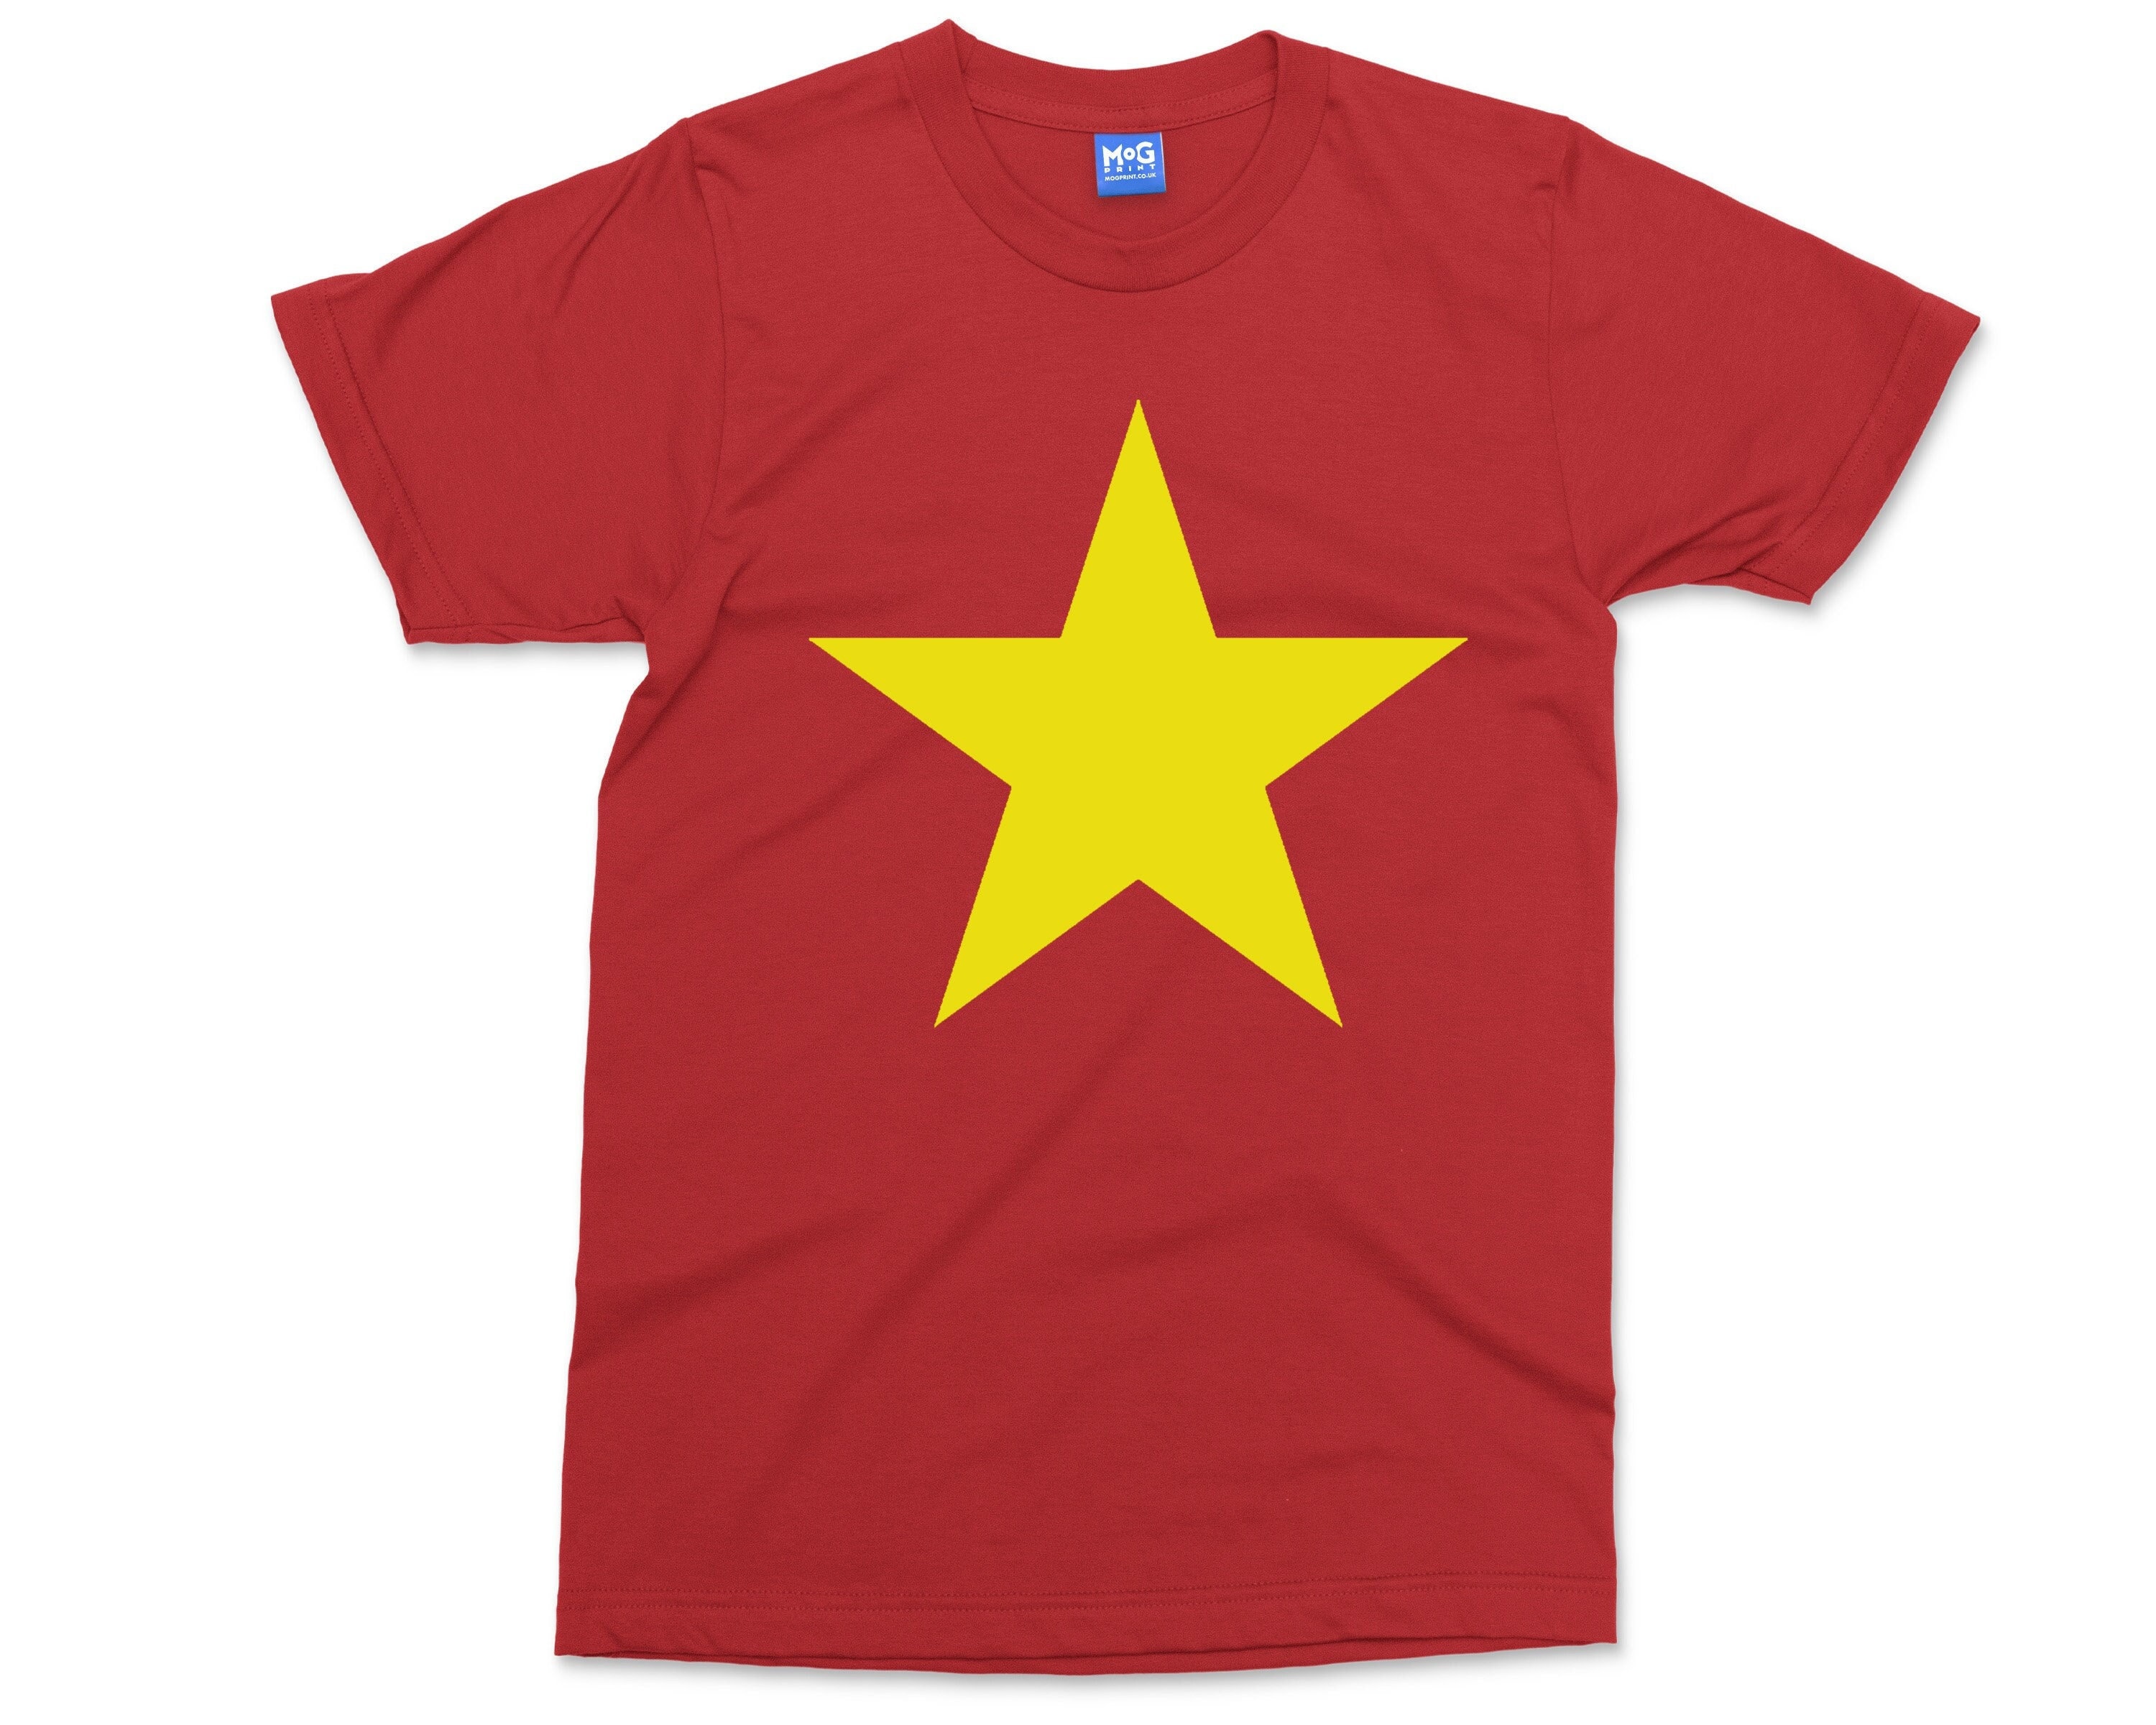 LUON VUITUOI LV Funny Vietnamese Viet VN Always Happy Saying Unisex T-Shirt  Mens